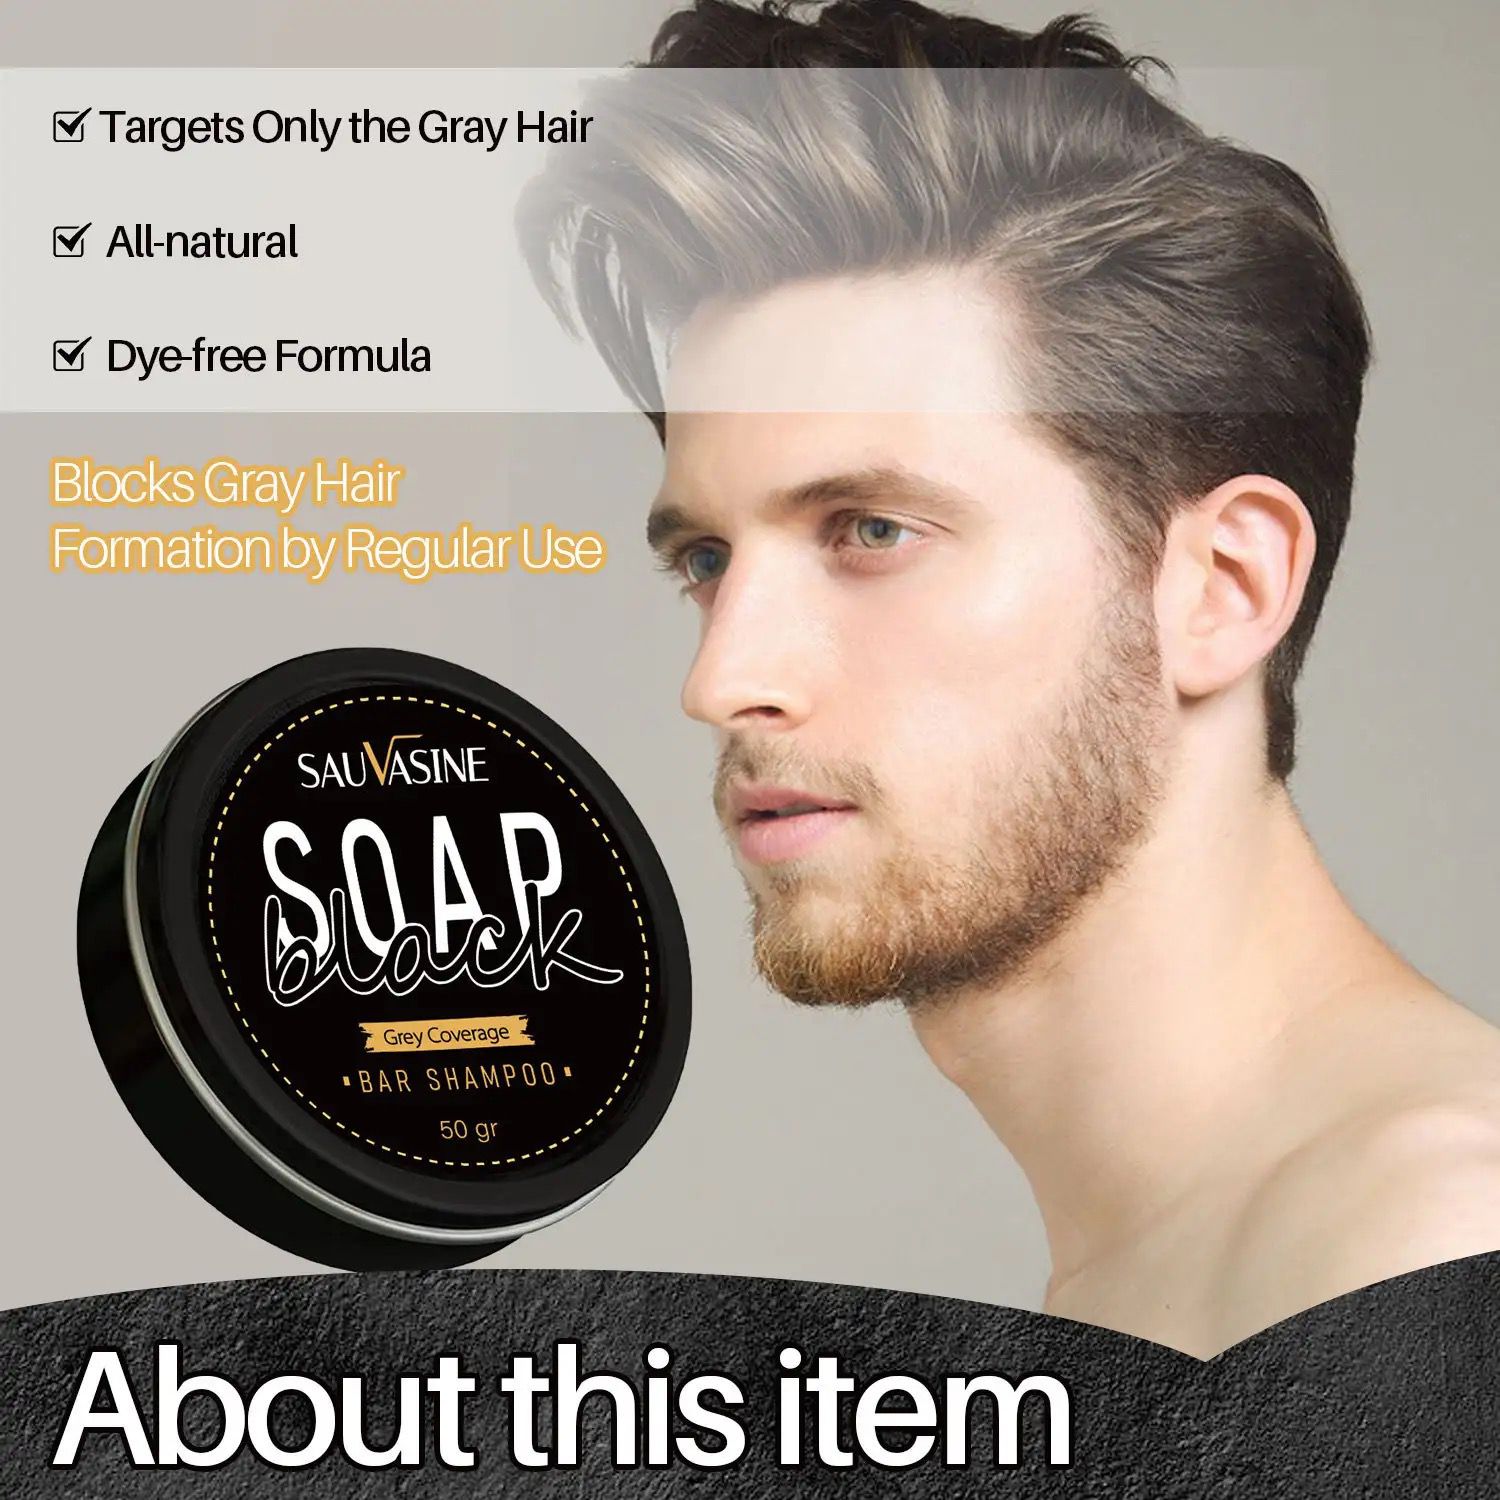 Grey hair remover soap